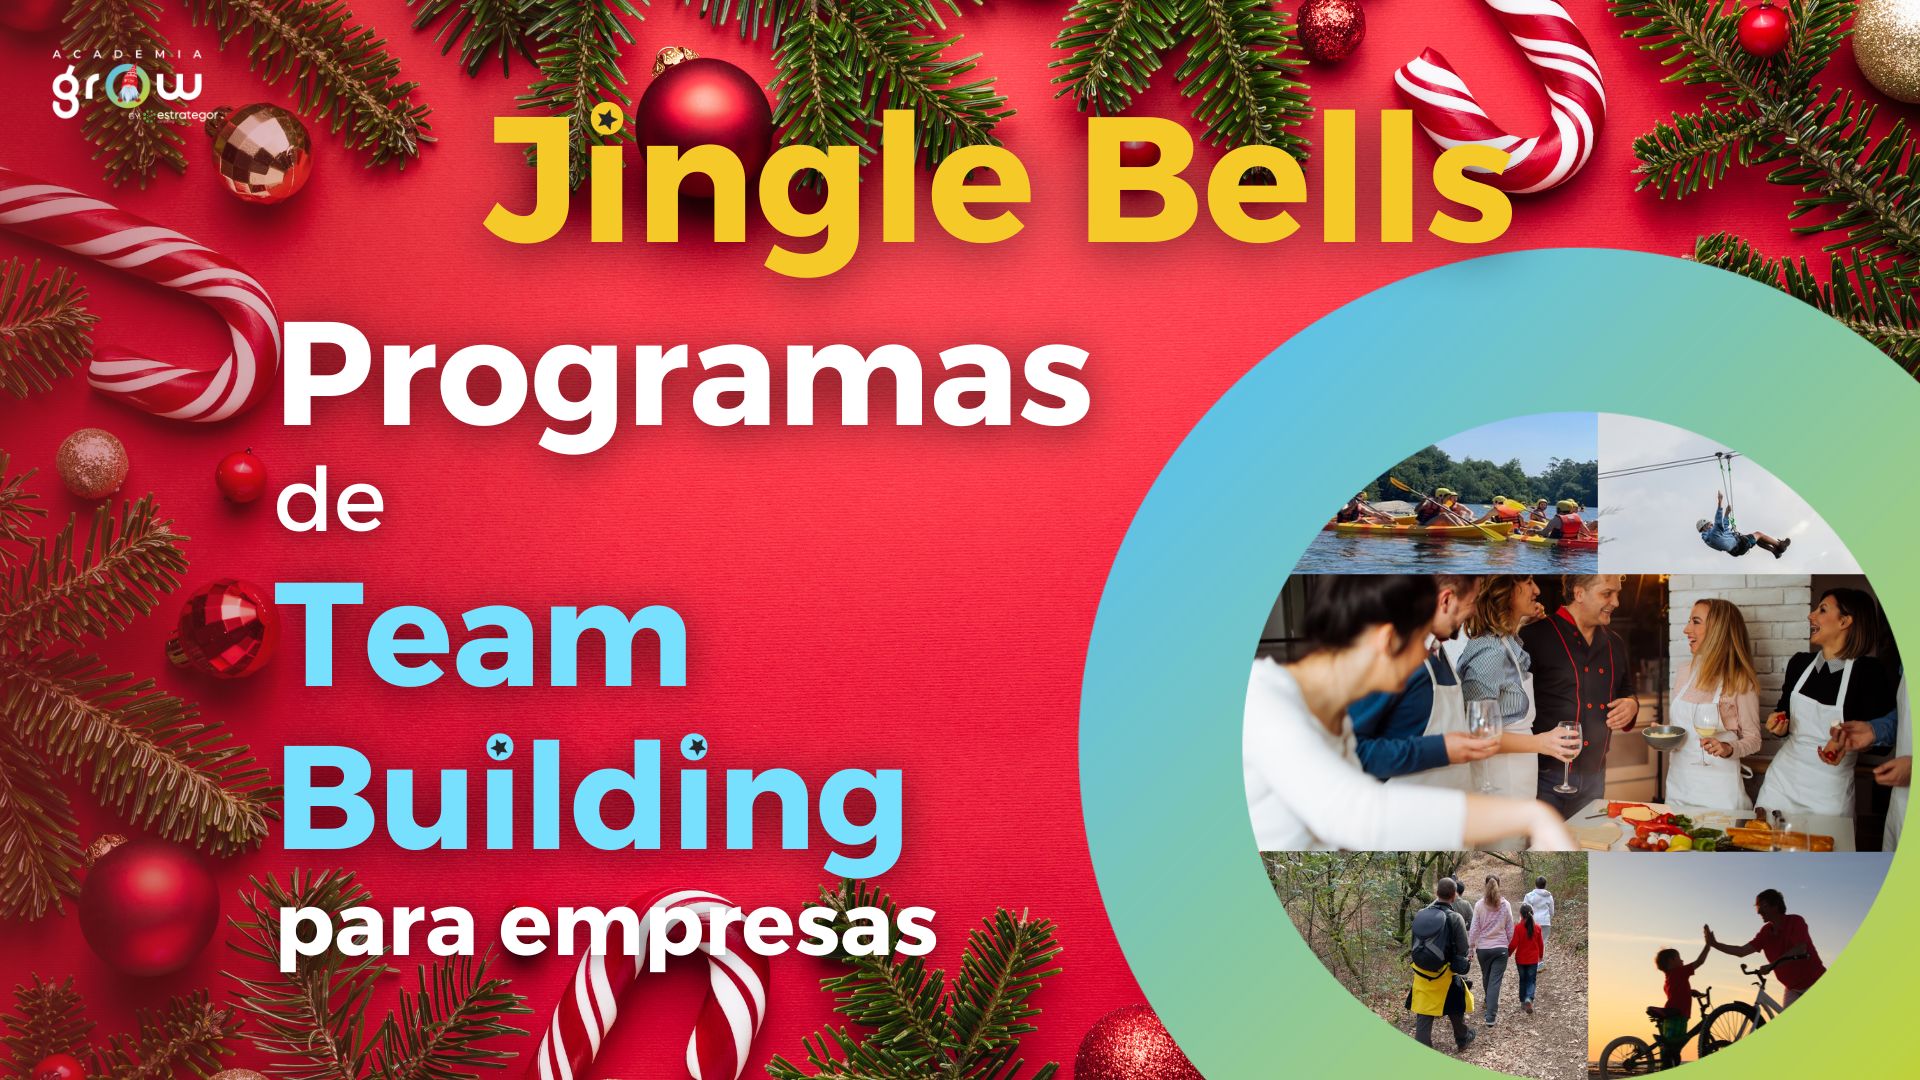 Jingle Bells team building empresas